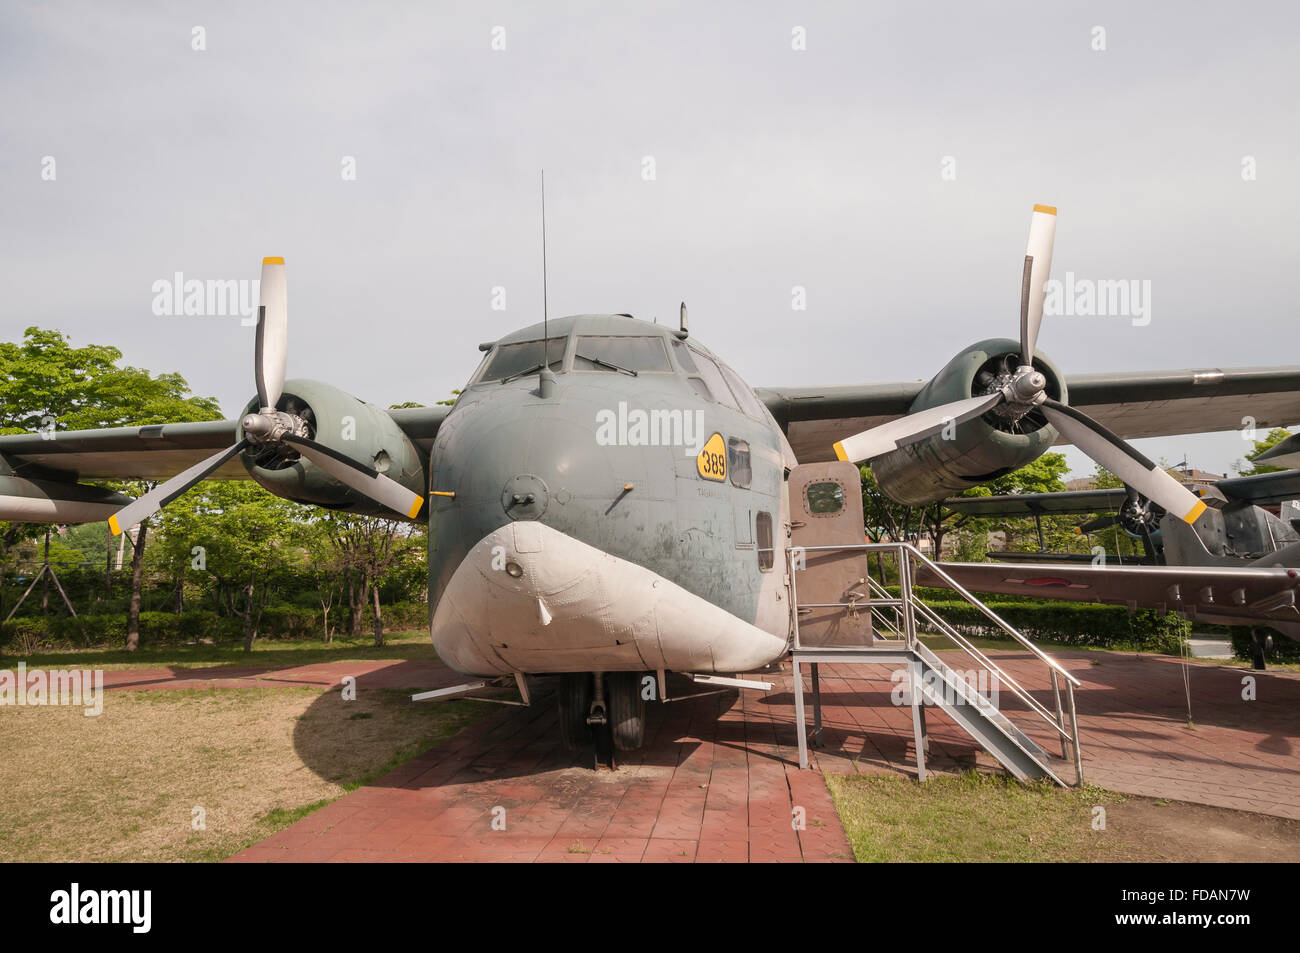 C-123 Provider Transport, (USA), War Memorial of Korea, Jeonjaeng ginyeomgwan, Yongsan-dong, Seoul, South Korea Stock Photo